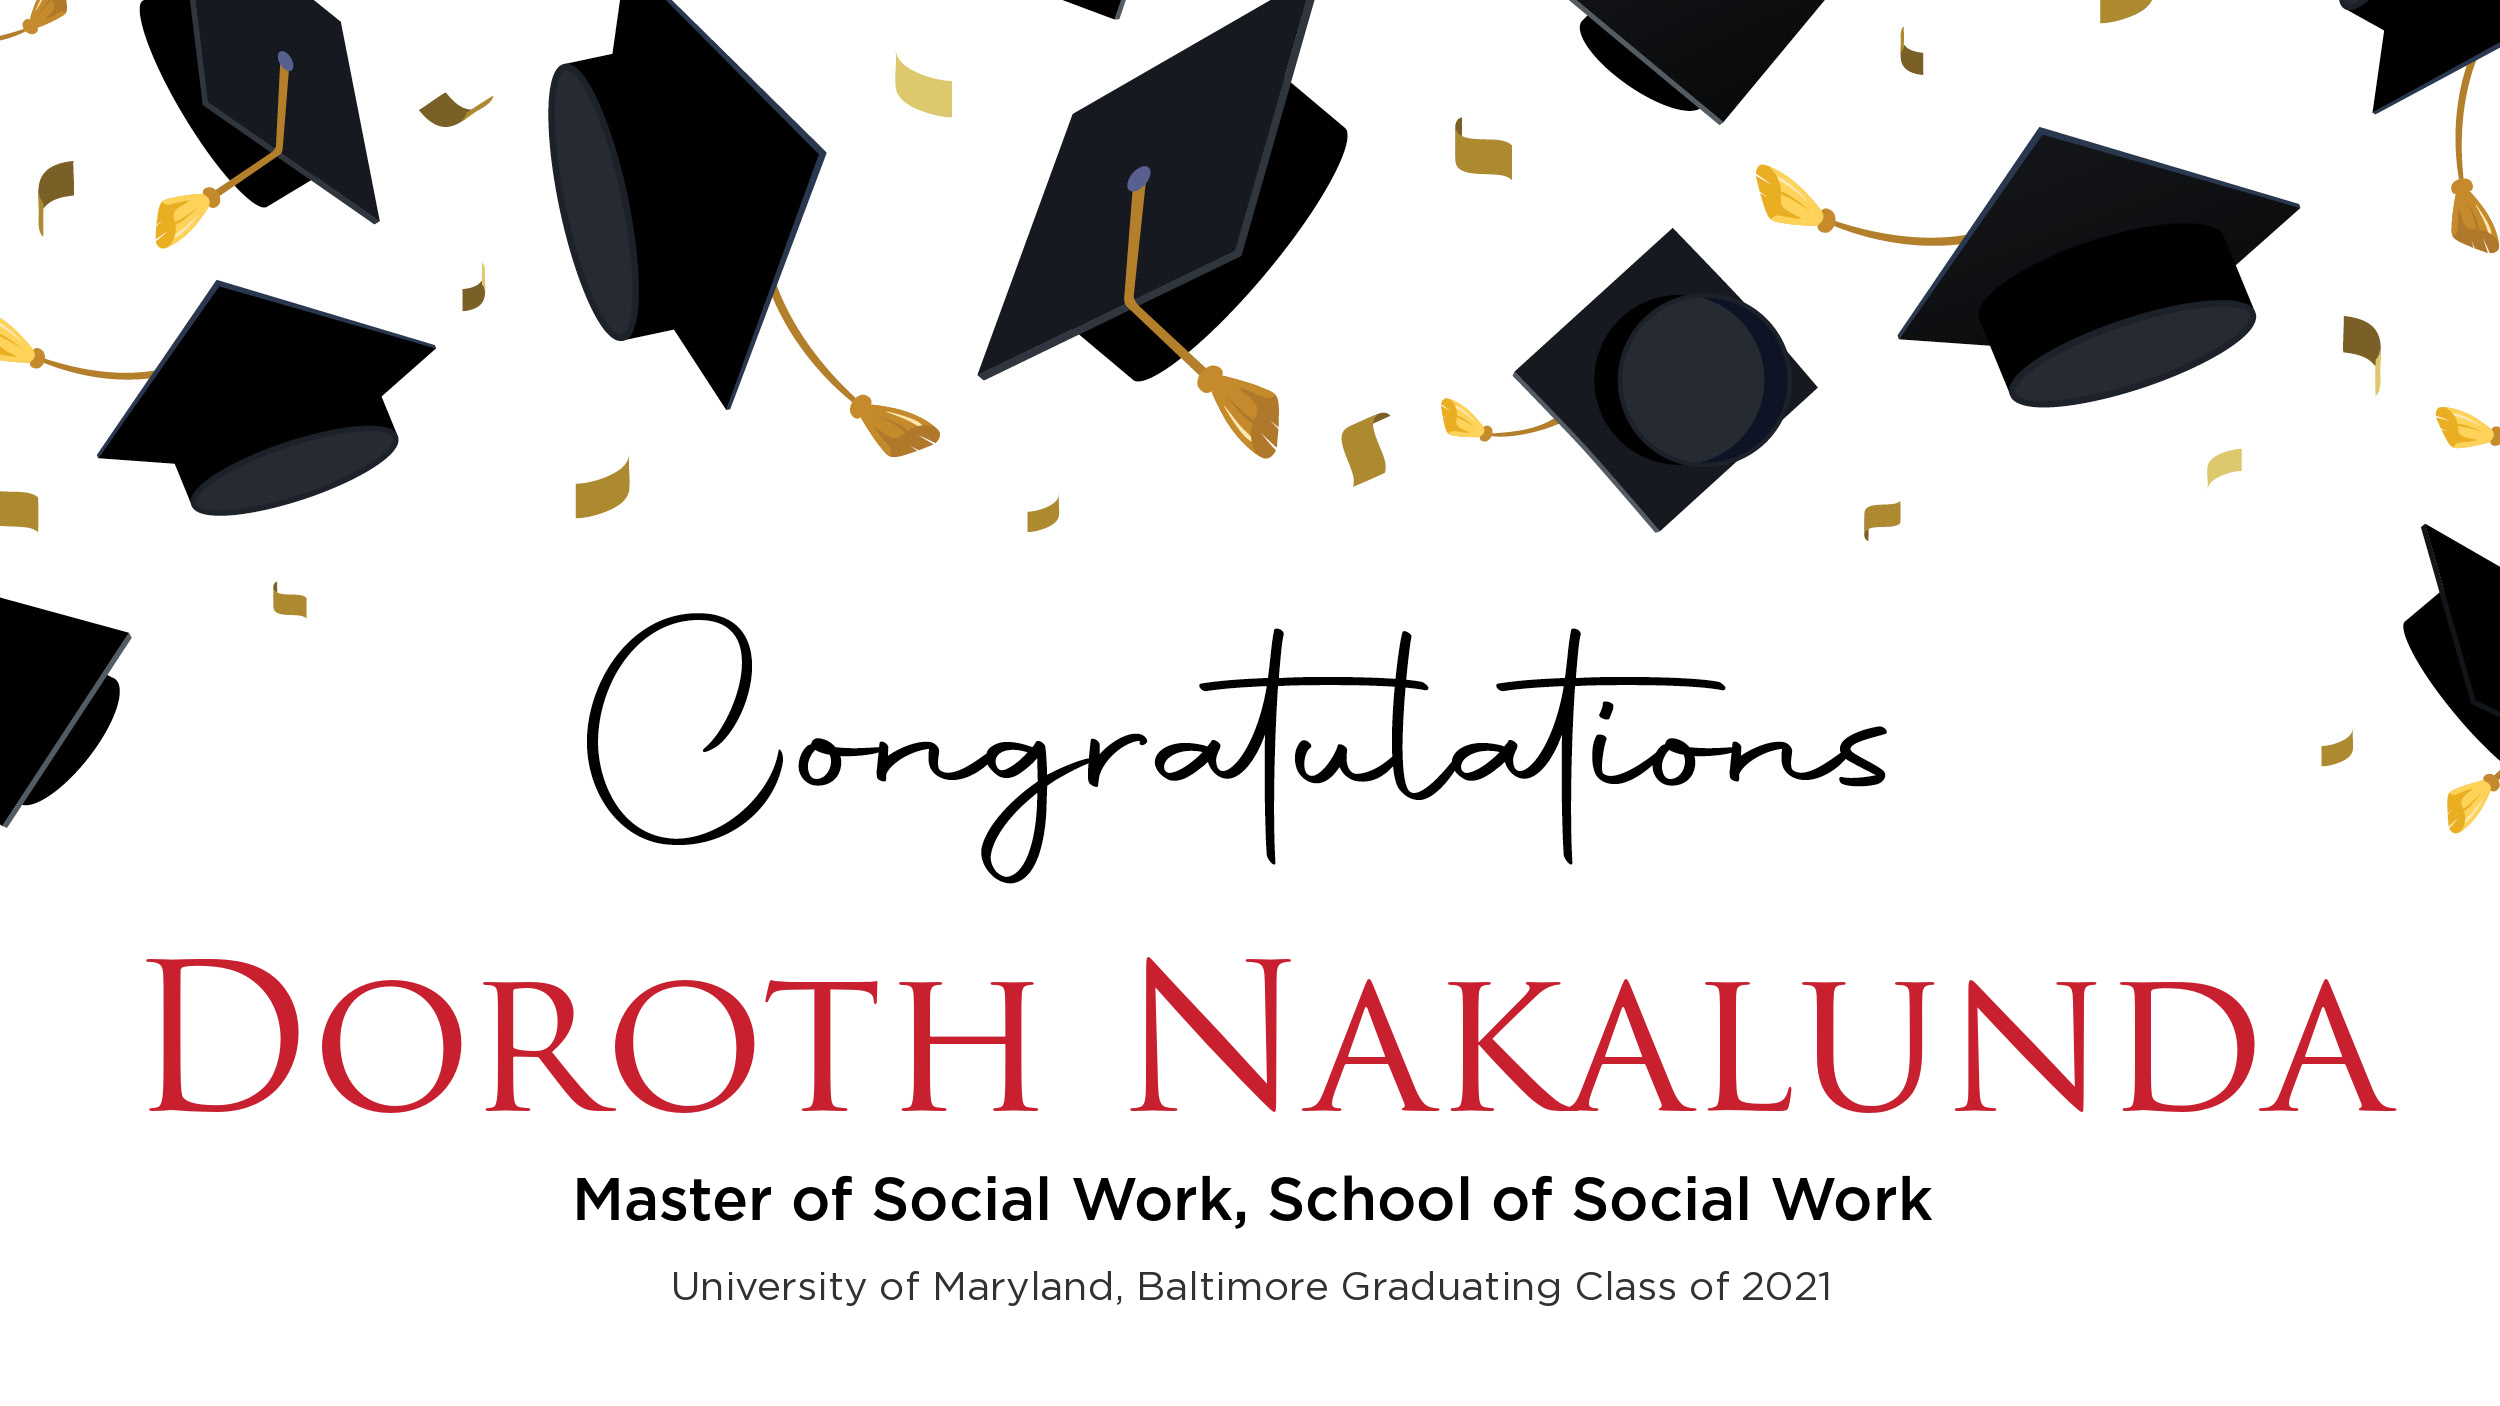 Congratulations Doroth Nakalunda, Master of Social Work